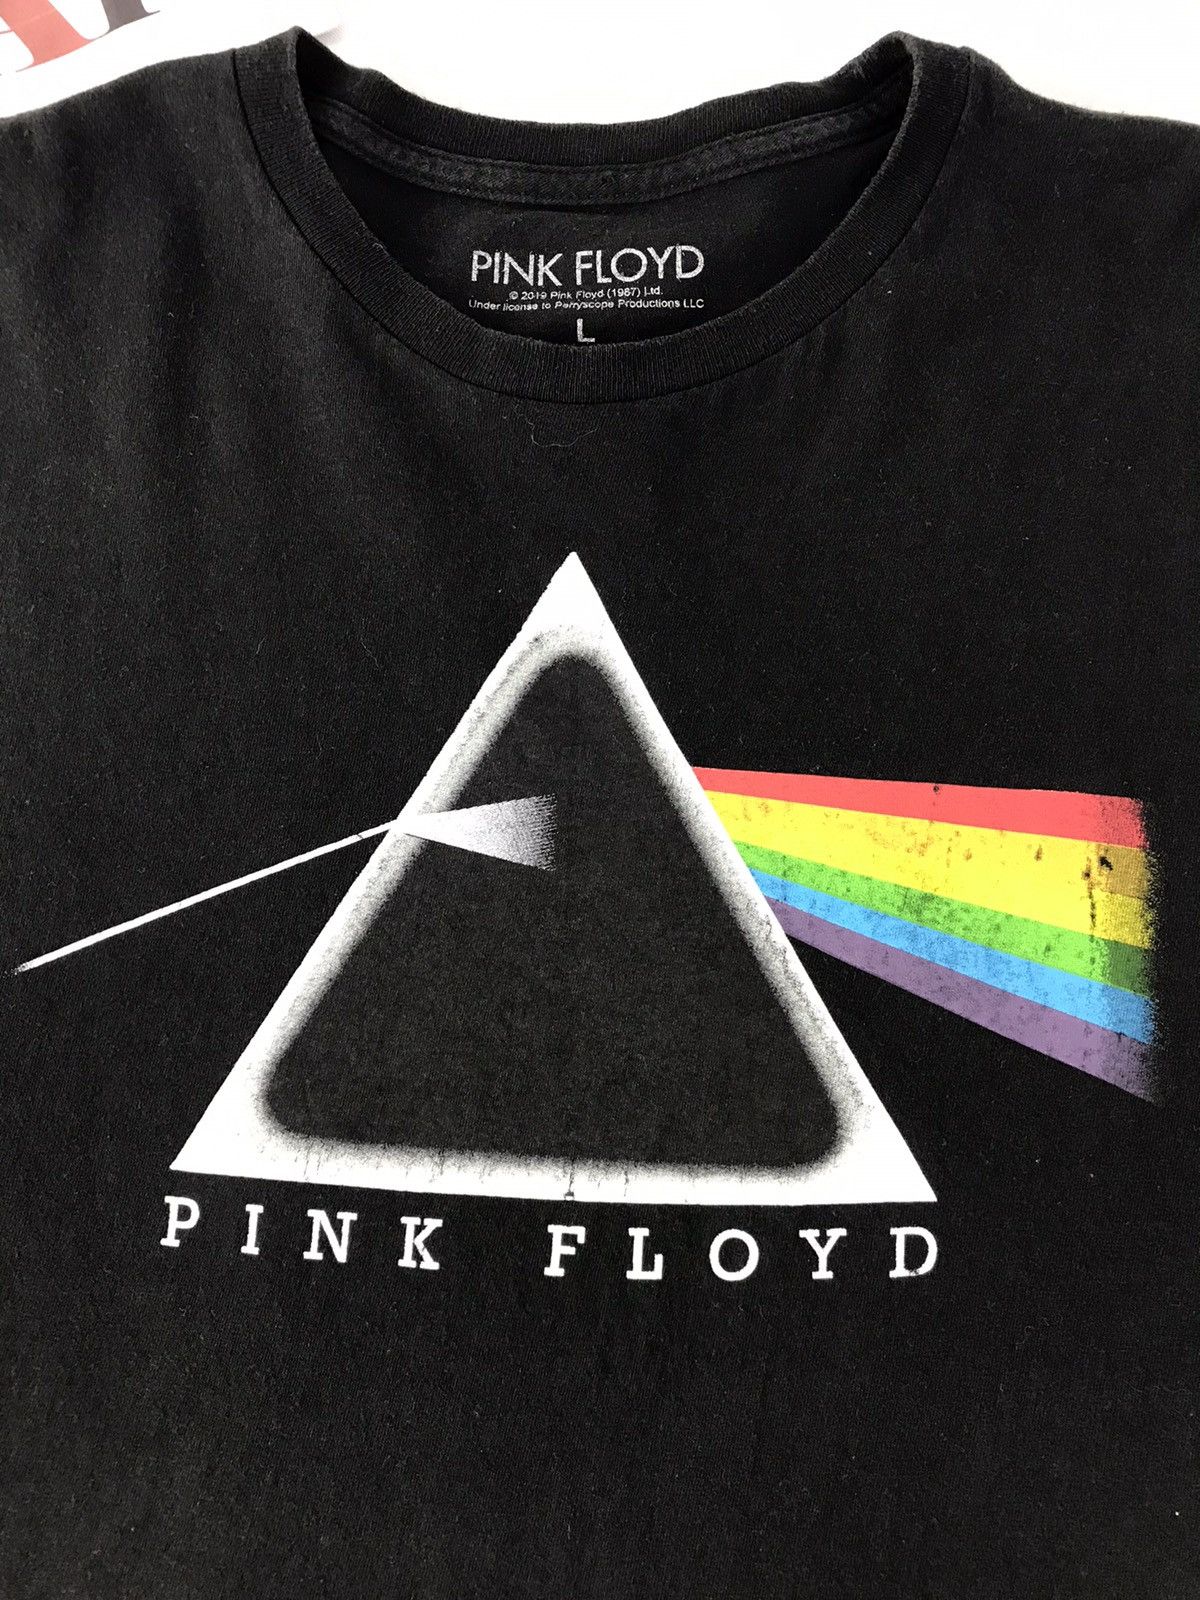 Pink Floyd Rock Band Pink Floyd Album The Dark Side Of The Moon Tee Size US L / EU 52-54 / 3 - 4 Thumbnail